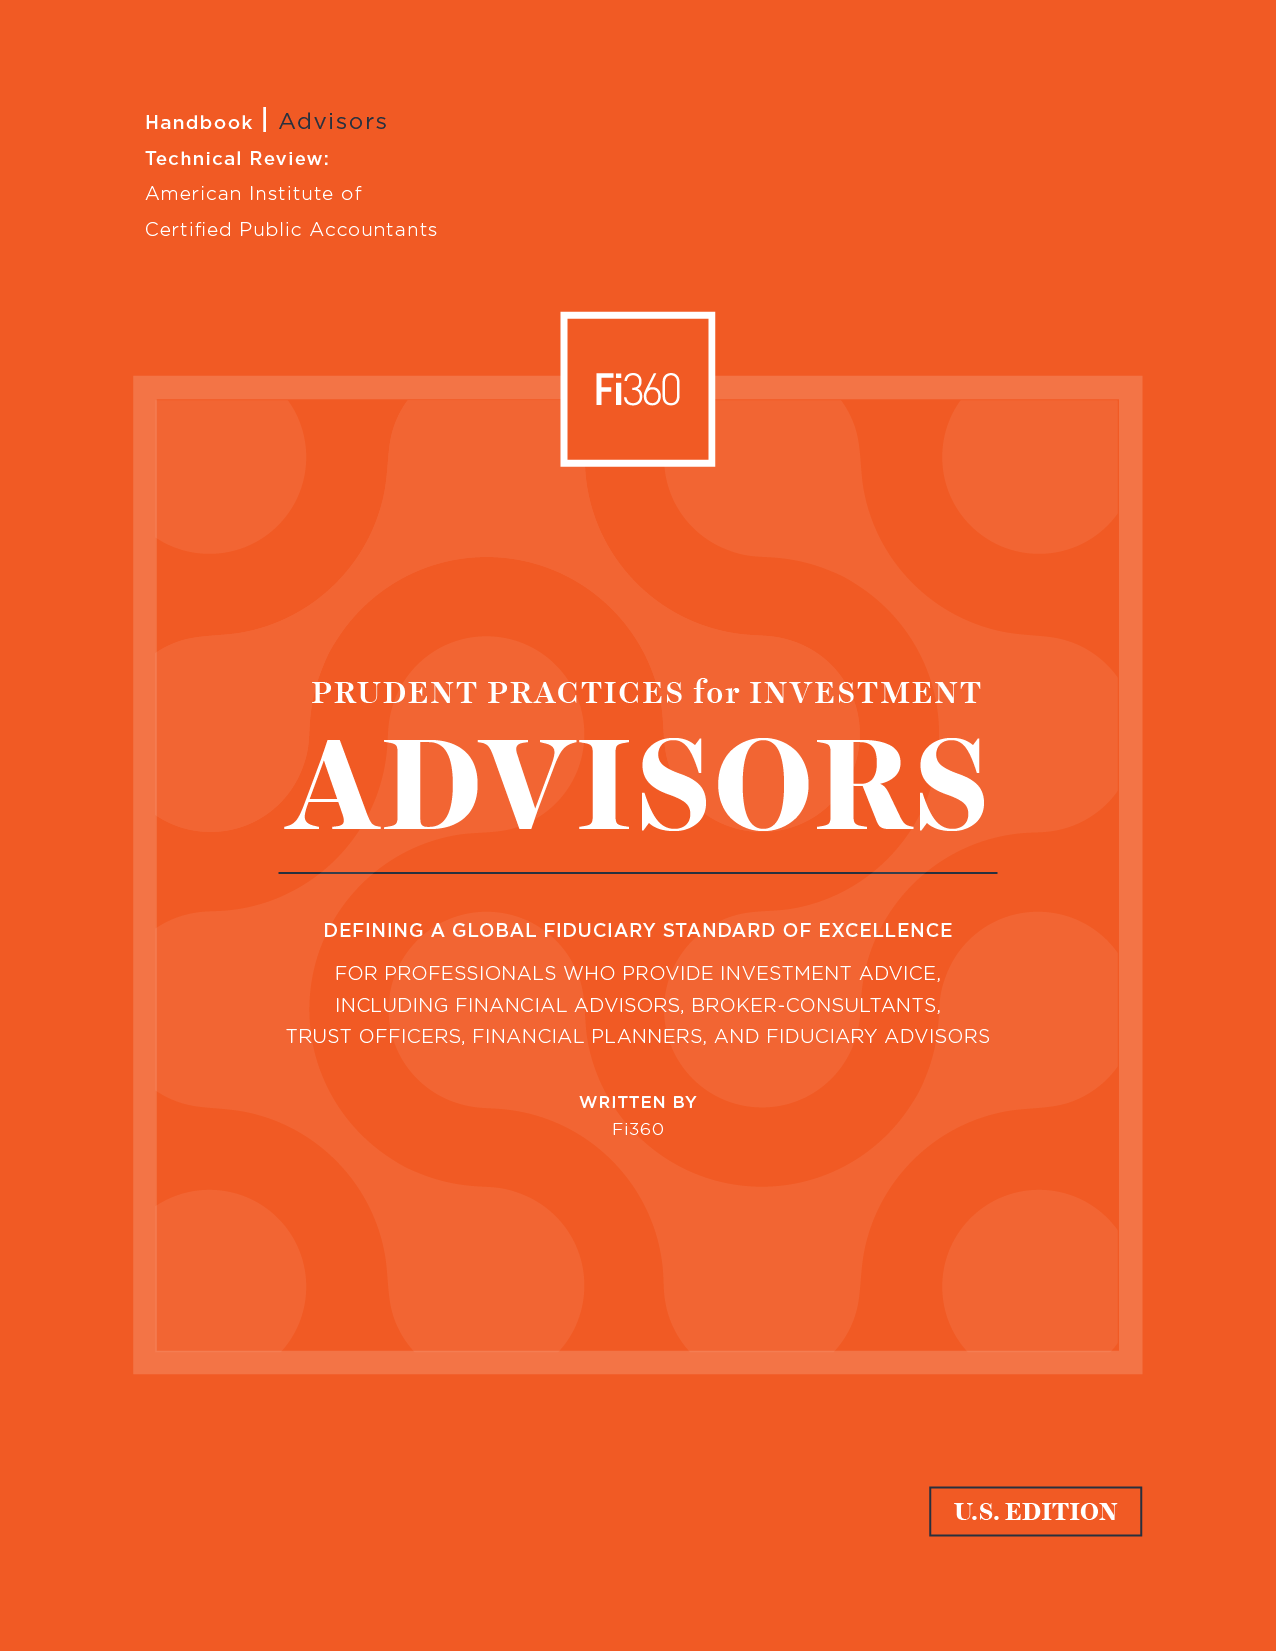 Investment Advisors